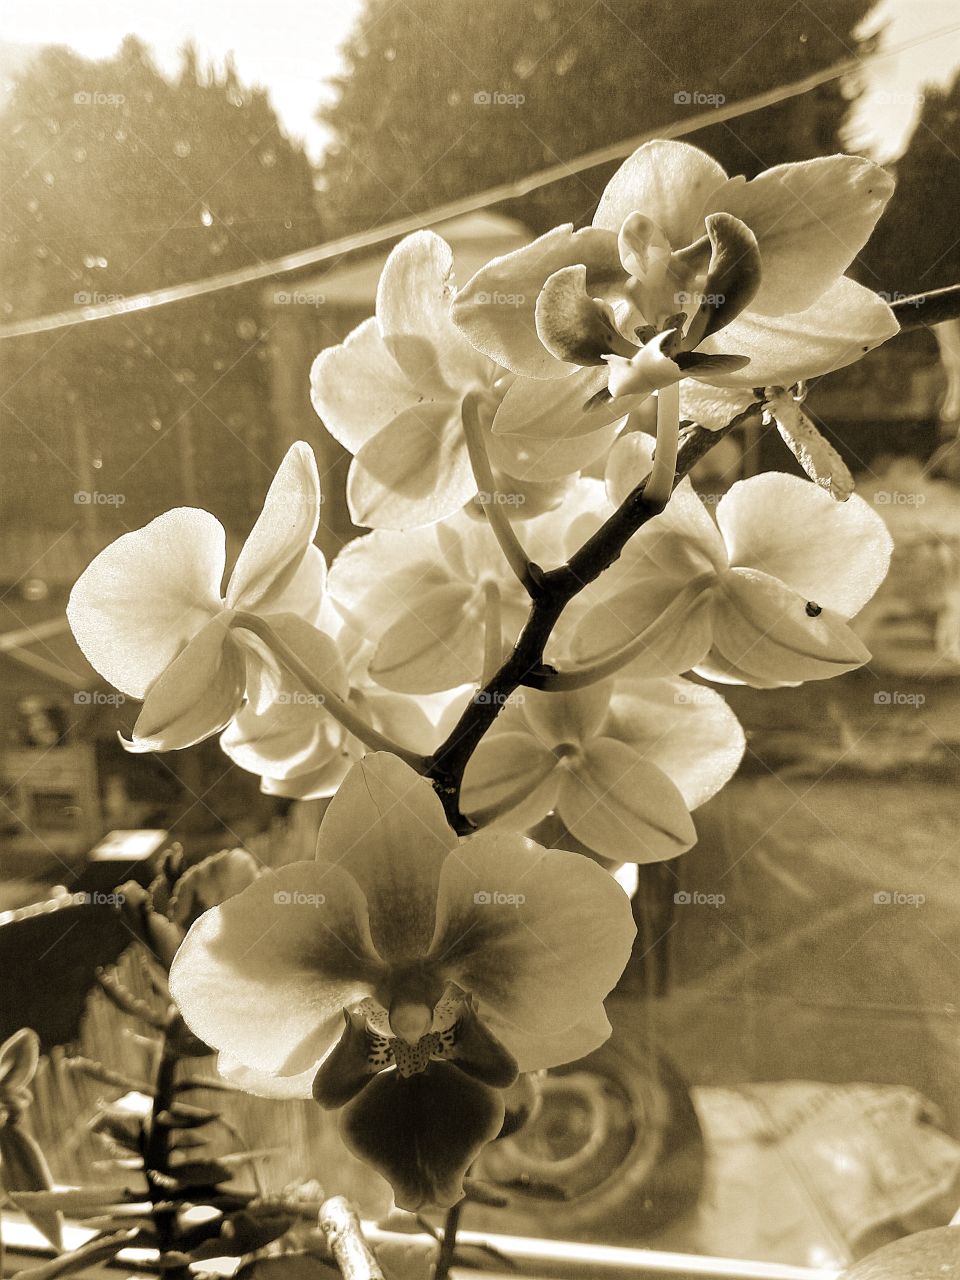 orchids in sepia tone